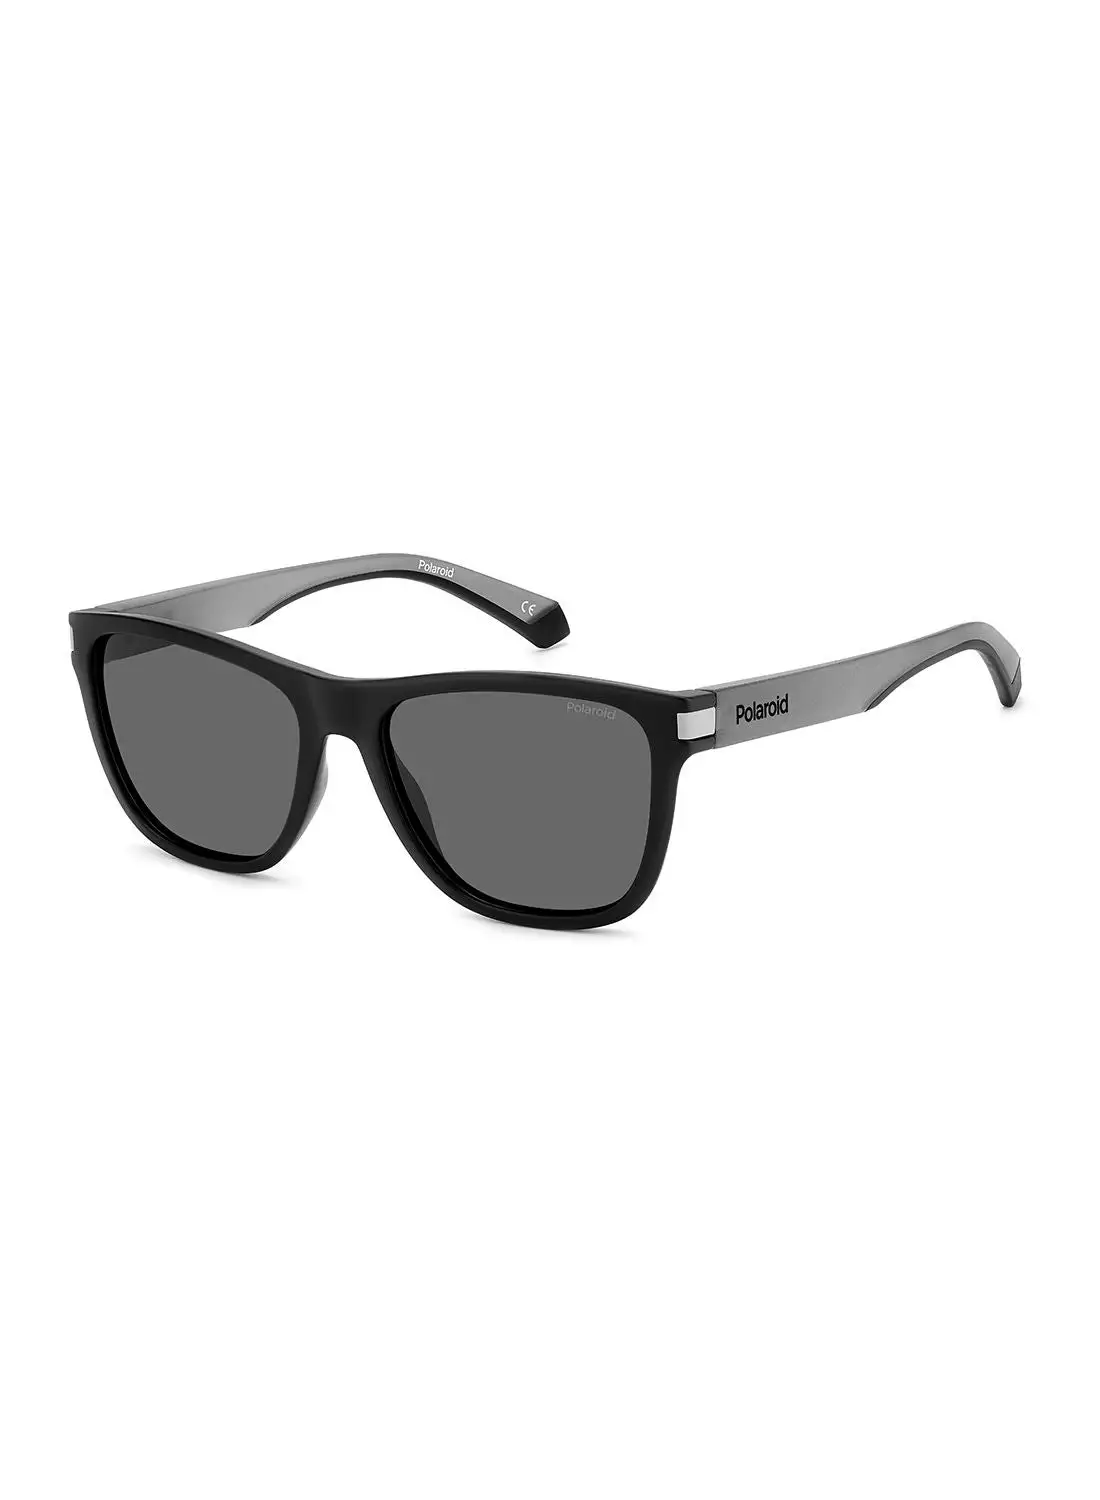 Polaroid Unisex UV Protection Square Sunglasses - Pld 2138/S Mtbk Grey 56 - Lens Size: 56 Mm